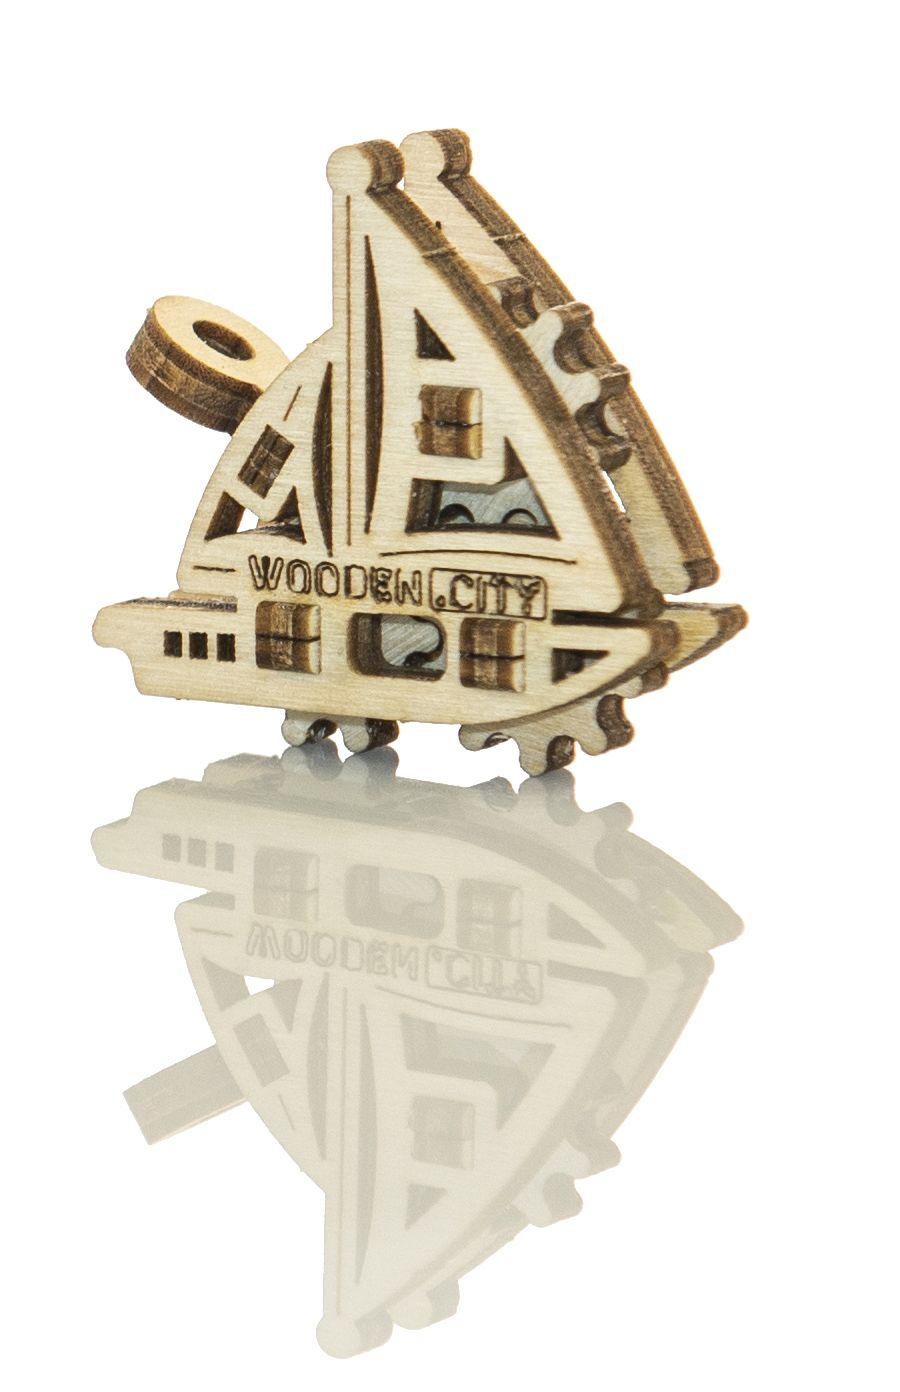 Wooden 3D Puzzle - Ships